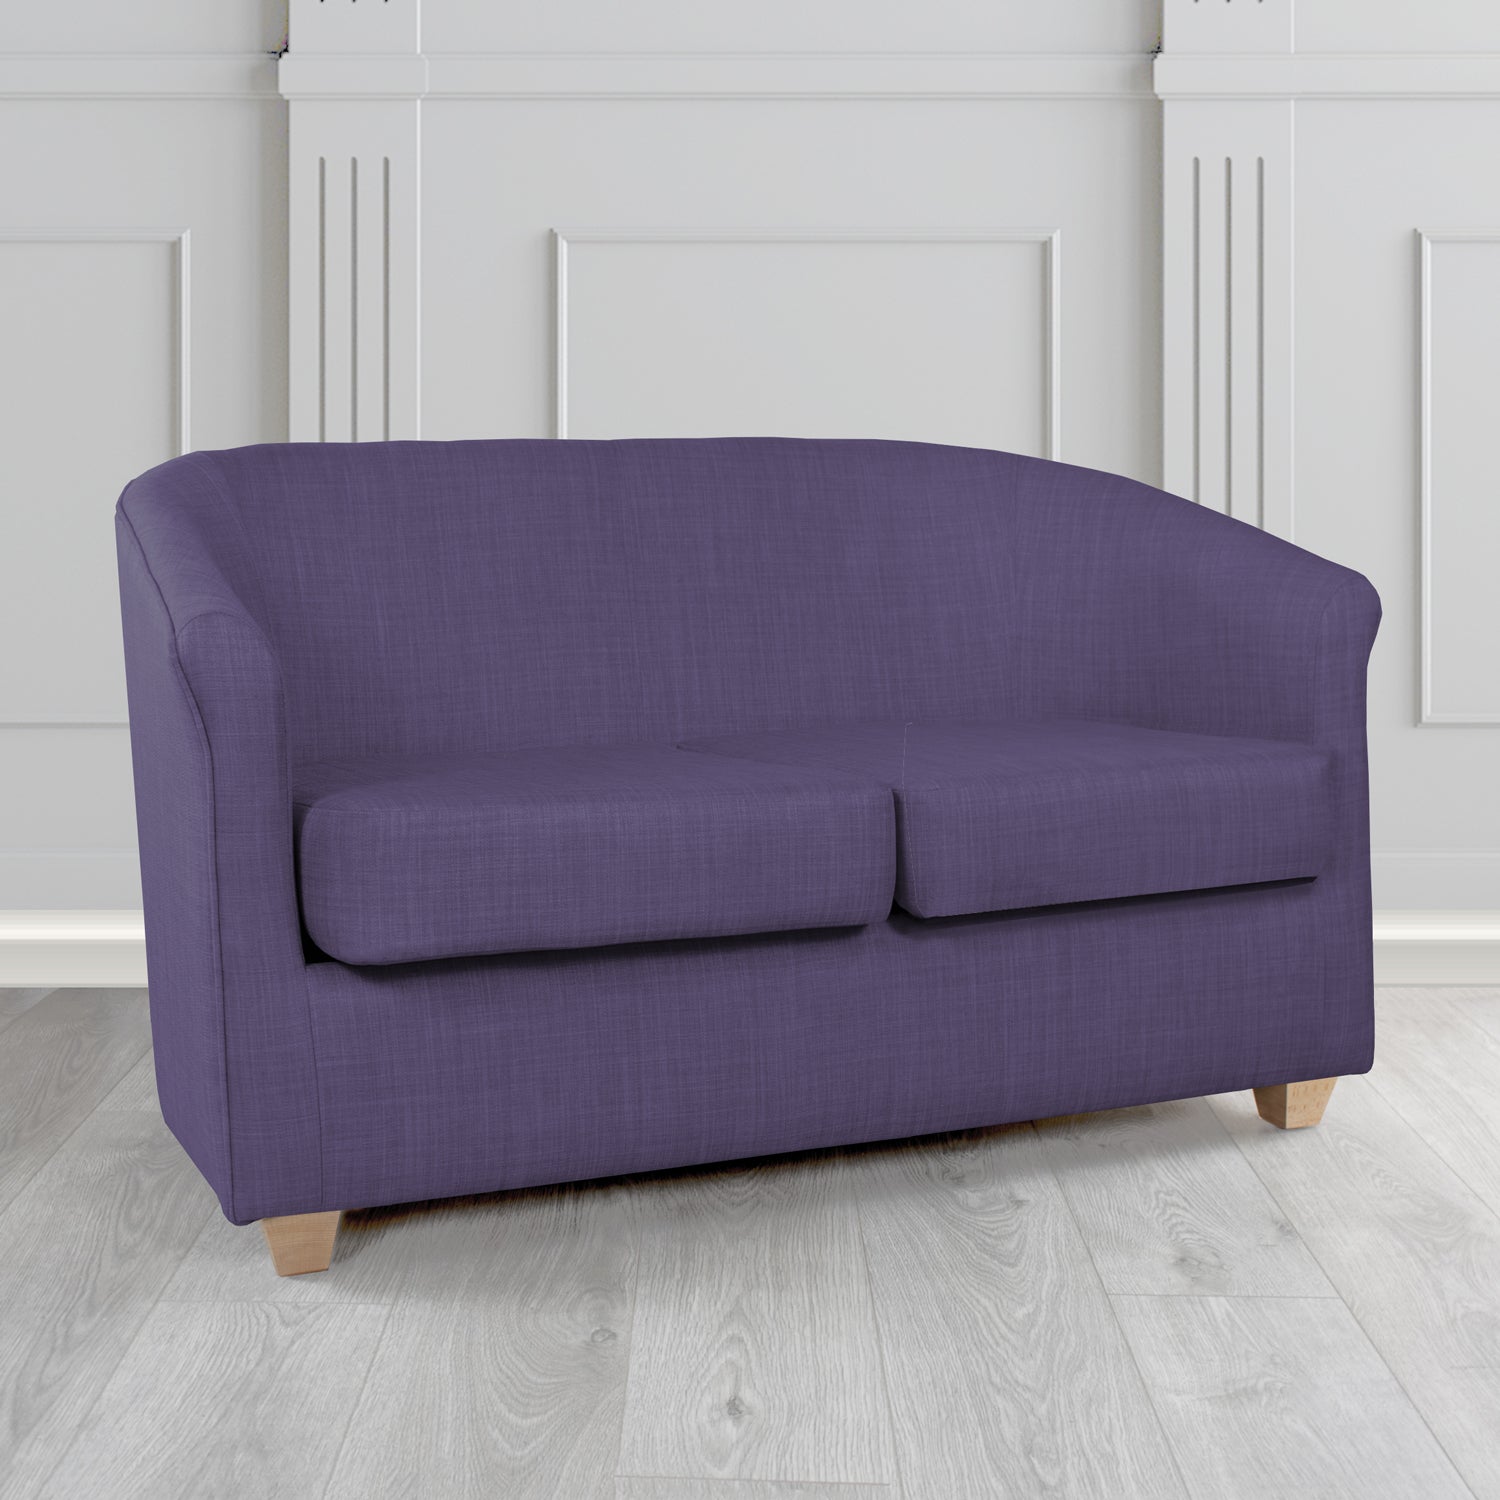 Cannes Charles Purple Linen Fabric 2 Seater Tub Sofa - The Tub Chair Shop